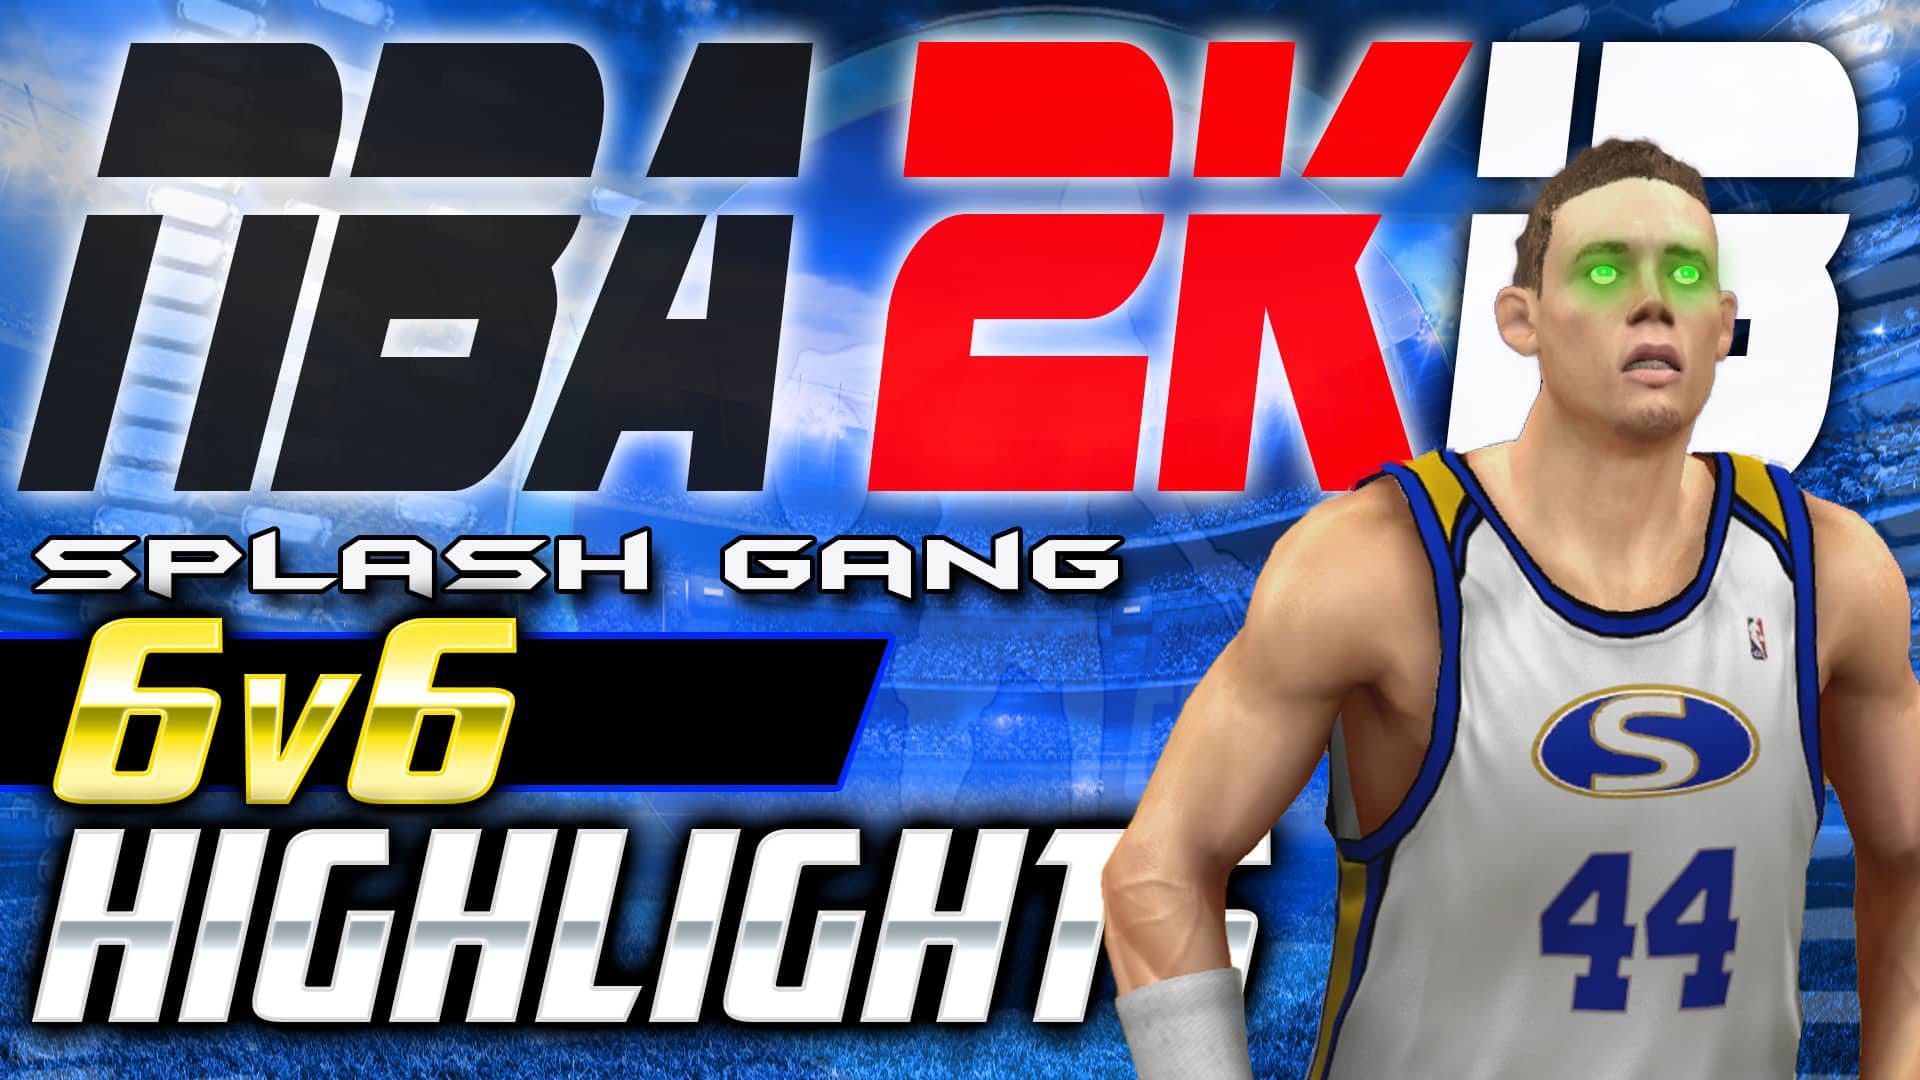 NBA 2K13_Splash Gang 6v6 Highlights